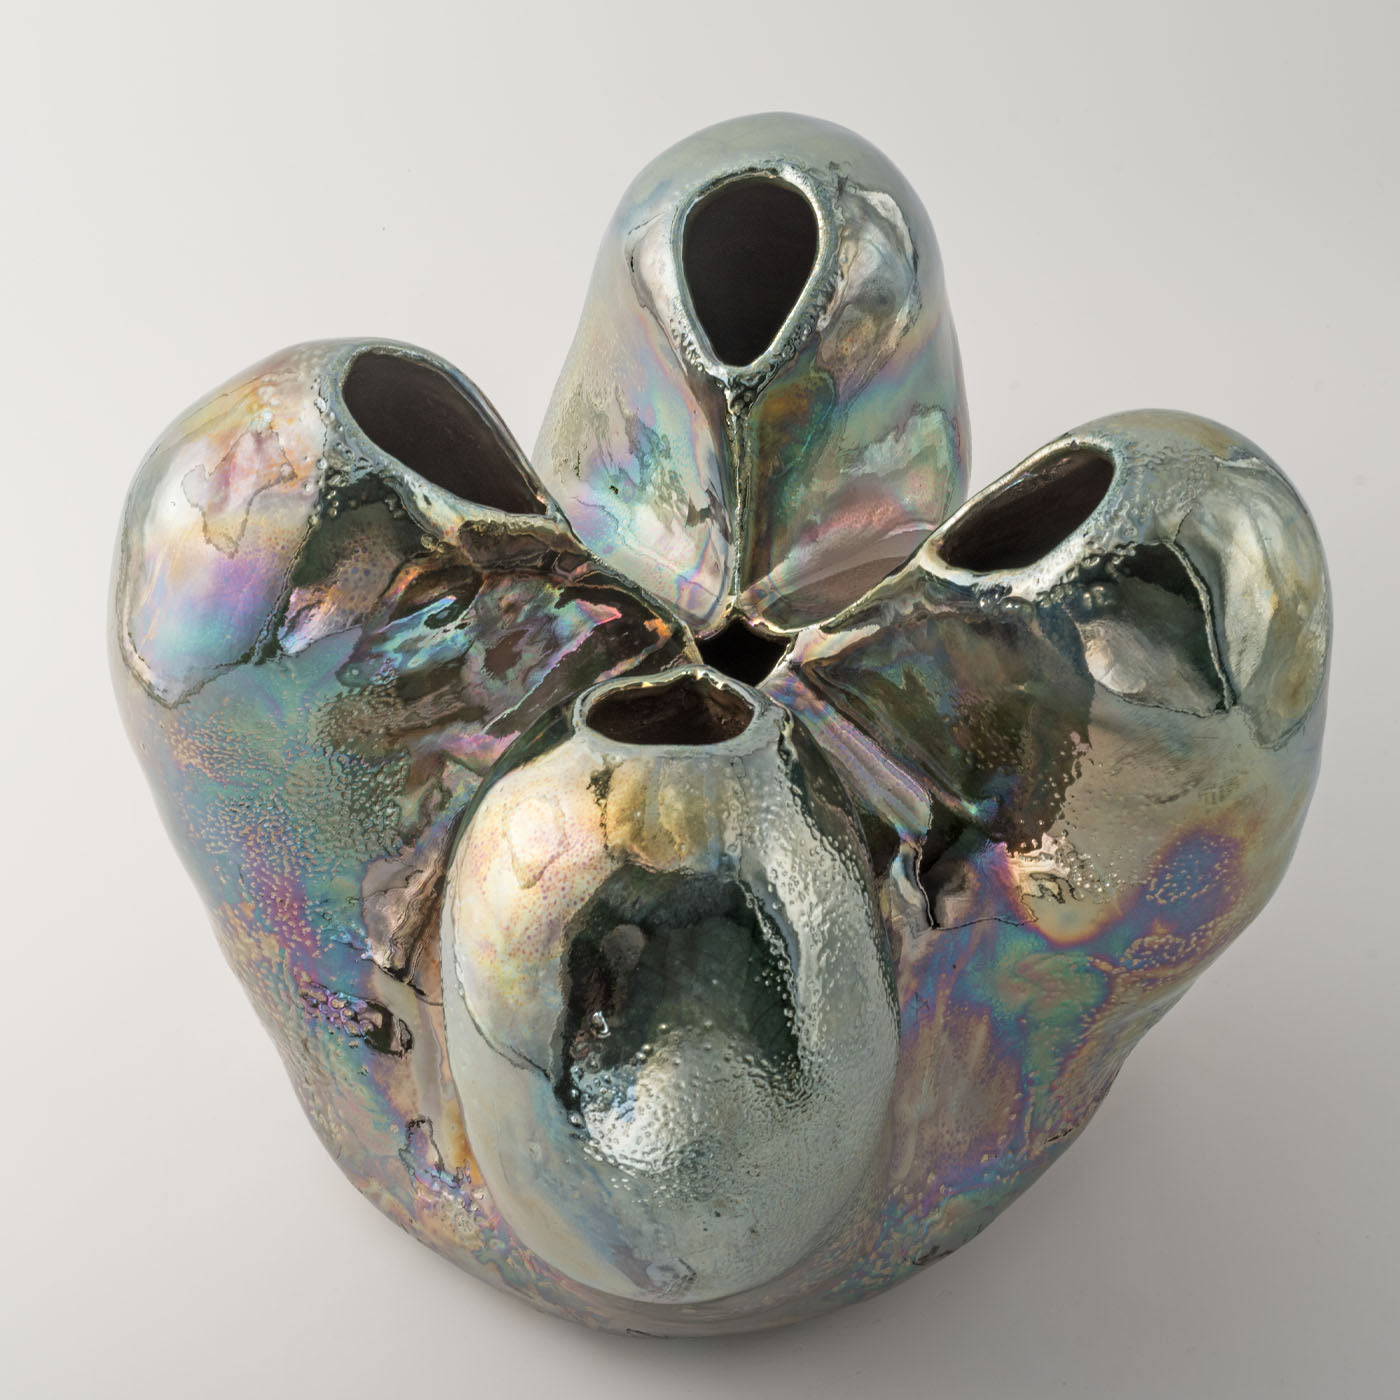 Abbraccio Raku Polychrome Ceramic Sculpture by Nino Basso - Alternative view 3